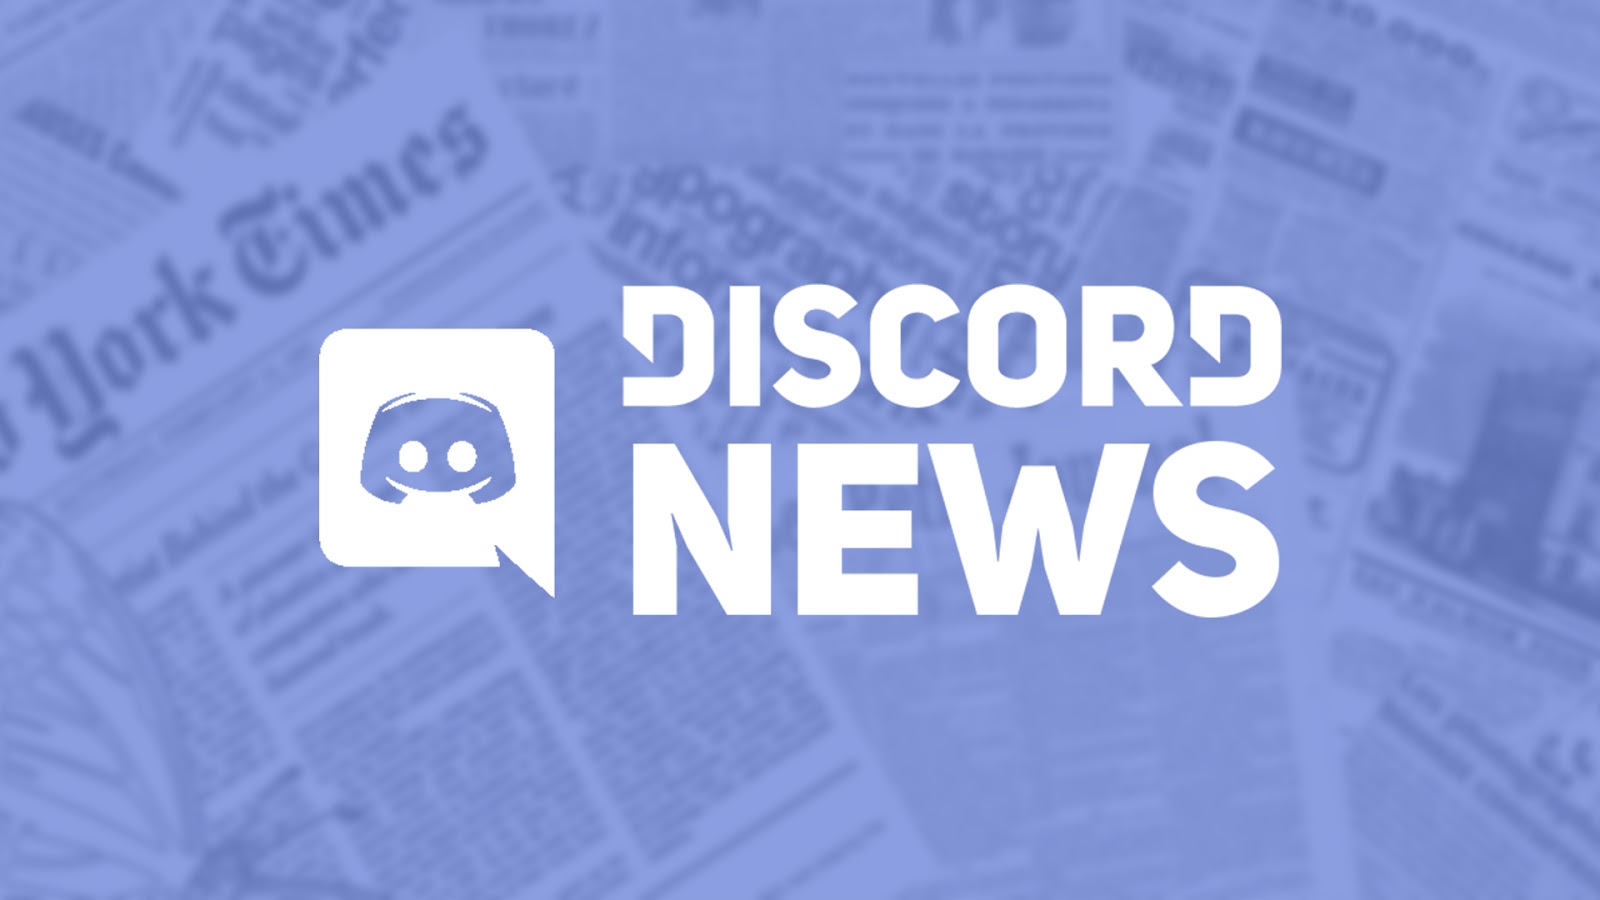 Дискорд 2020. Discord 2020. Discord News. Новости discord картинка. Discord issue